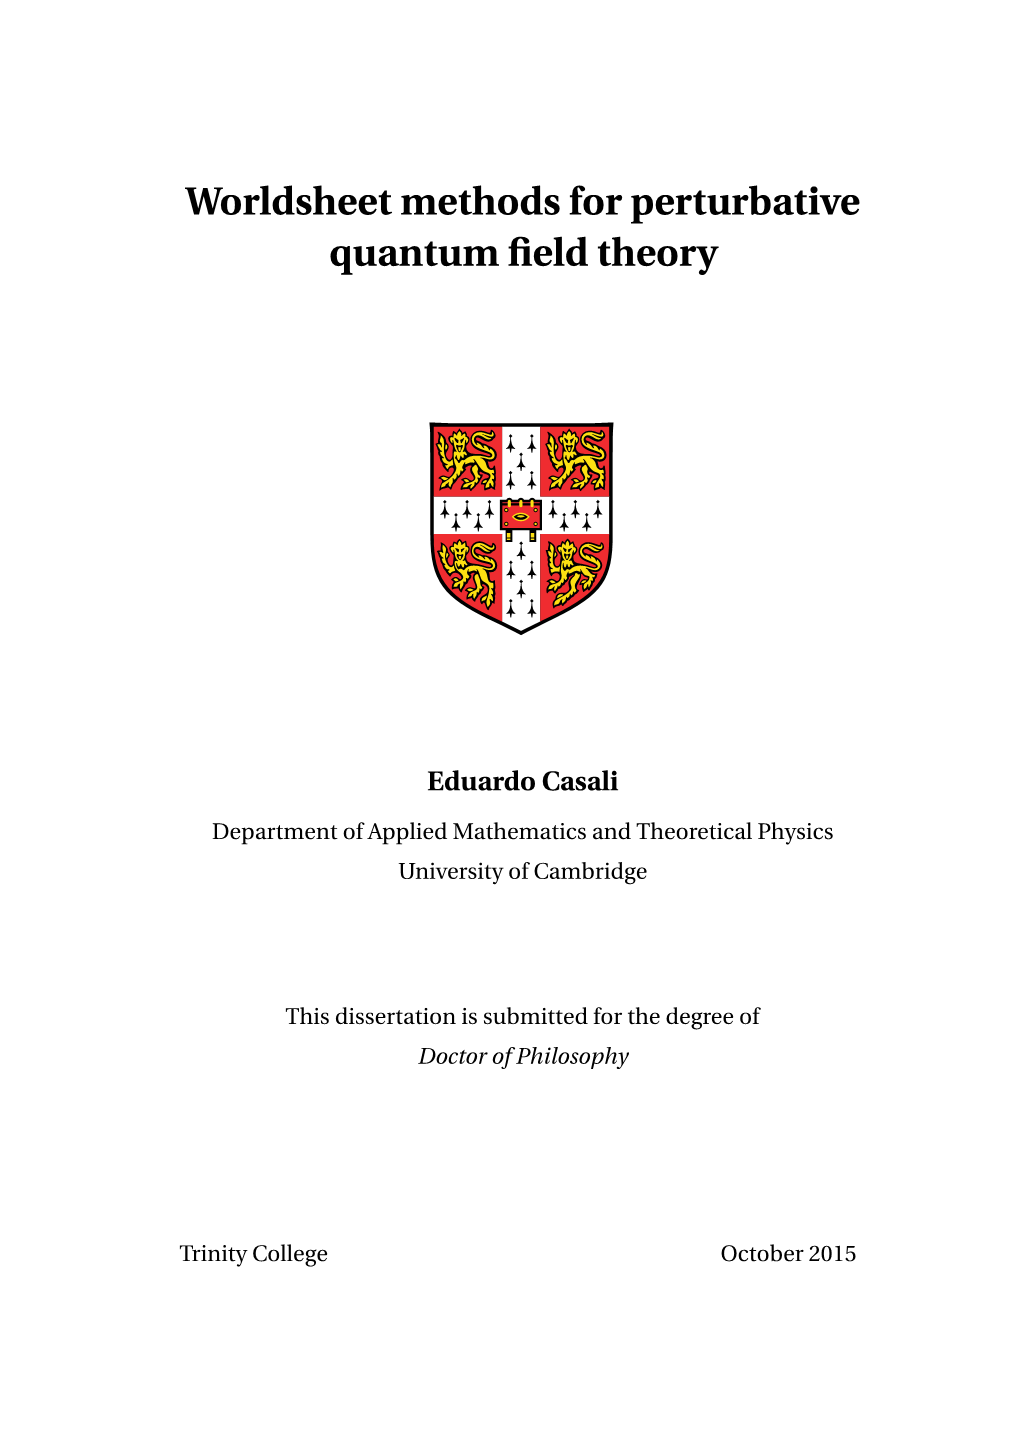 Worldsheet Methods for Perturbative Quantum Field Theory